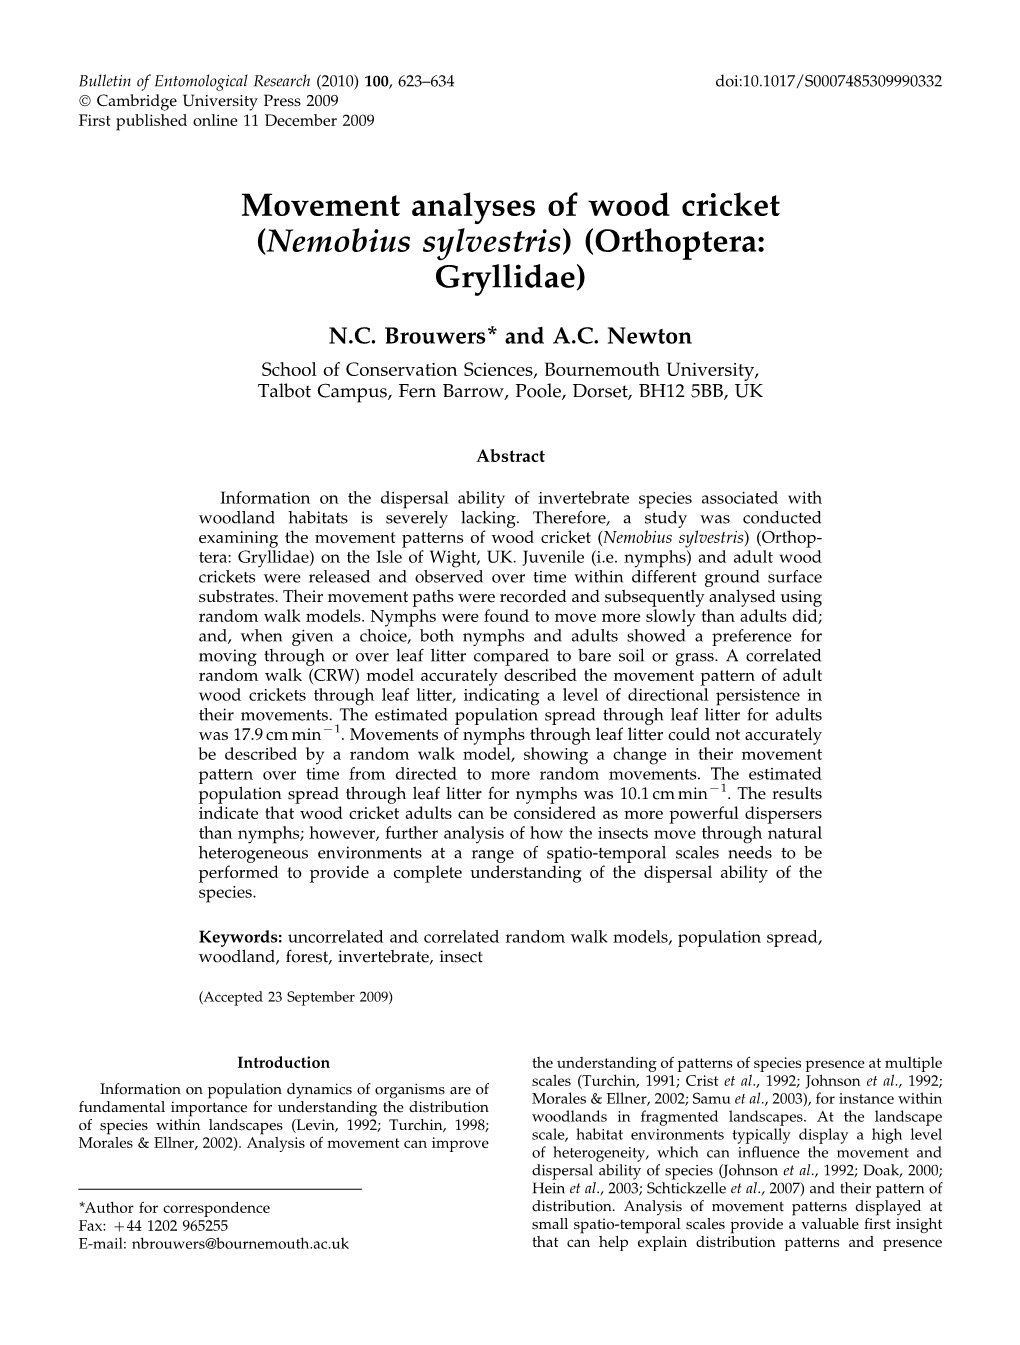 Movement Analyses of Wood Cricket ( Nemobius Sylvestris) (Orthoptera